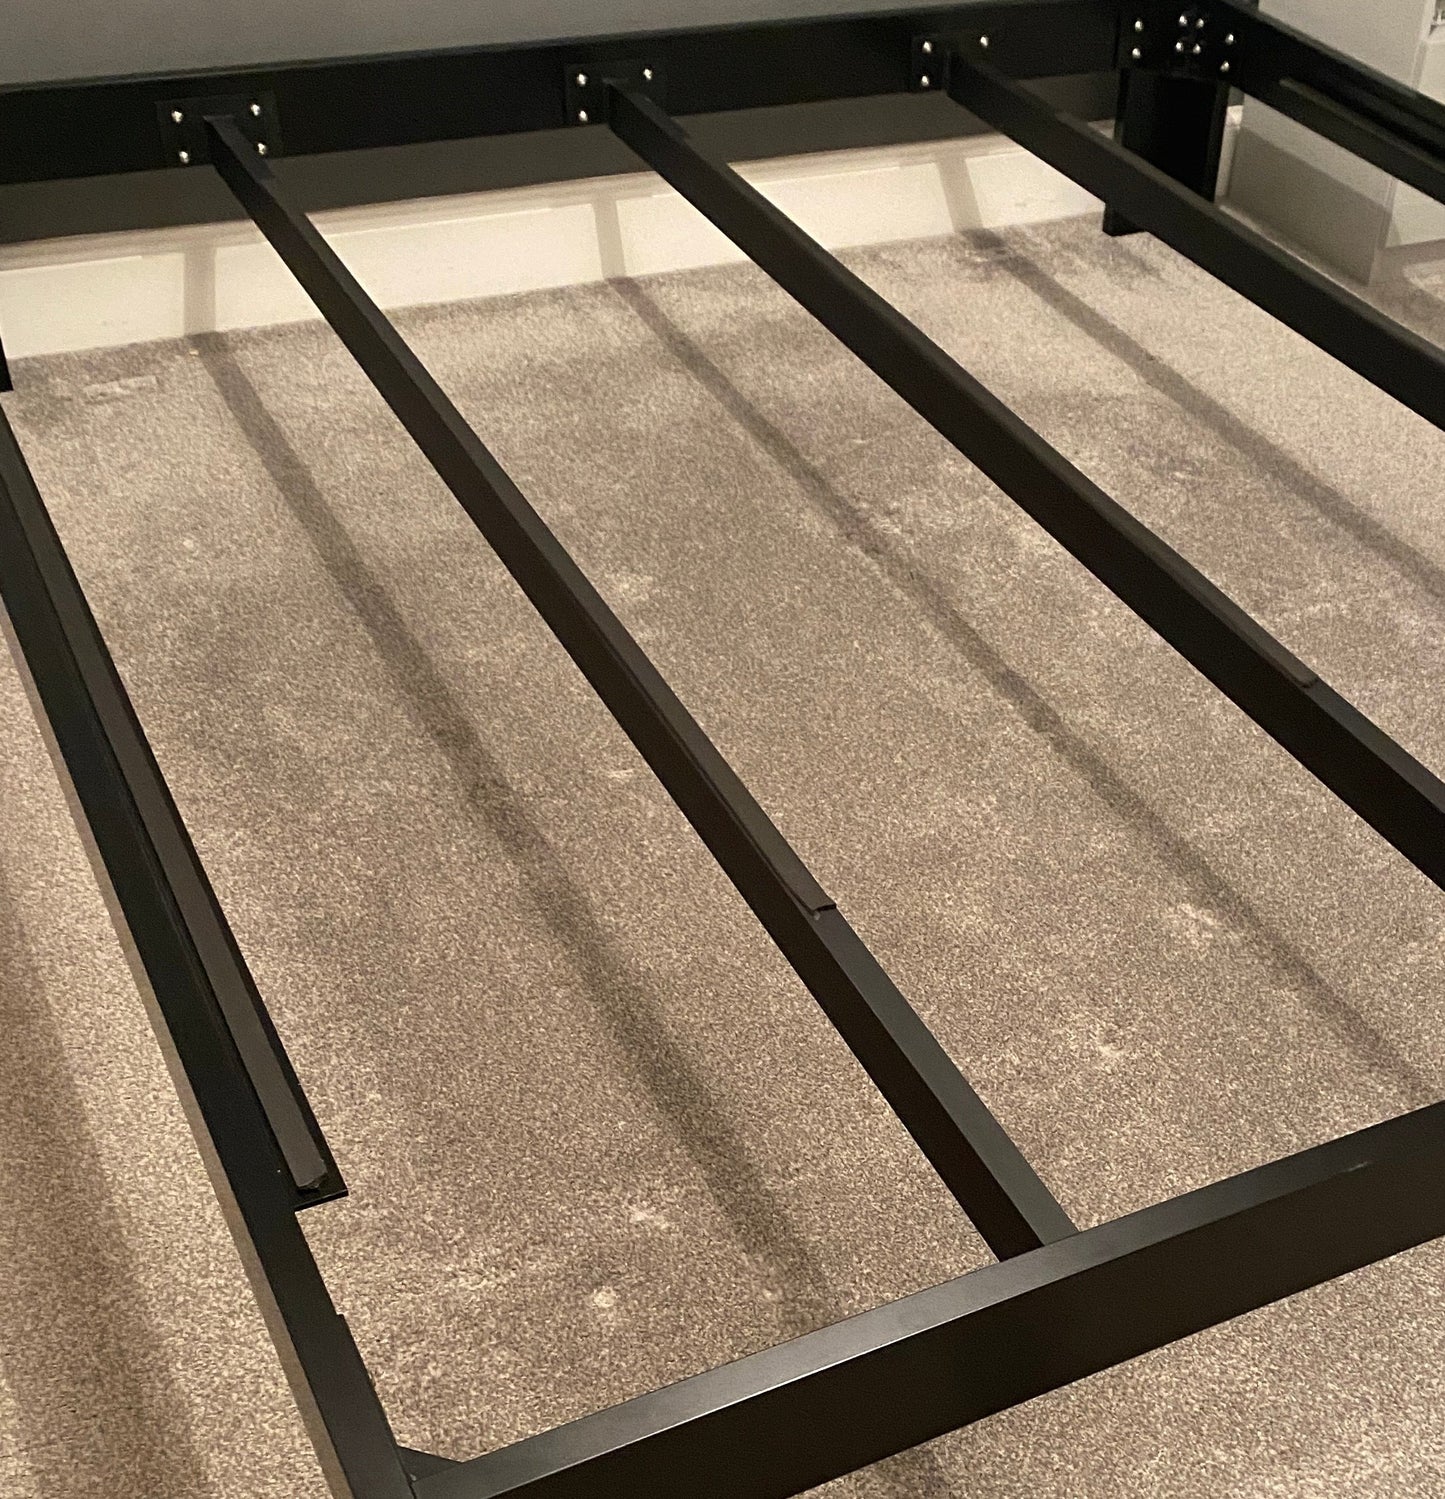 Aluminium Metal Double Bed Frame - RESS Furniture Ltd. Aluminium Frames